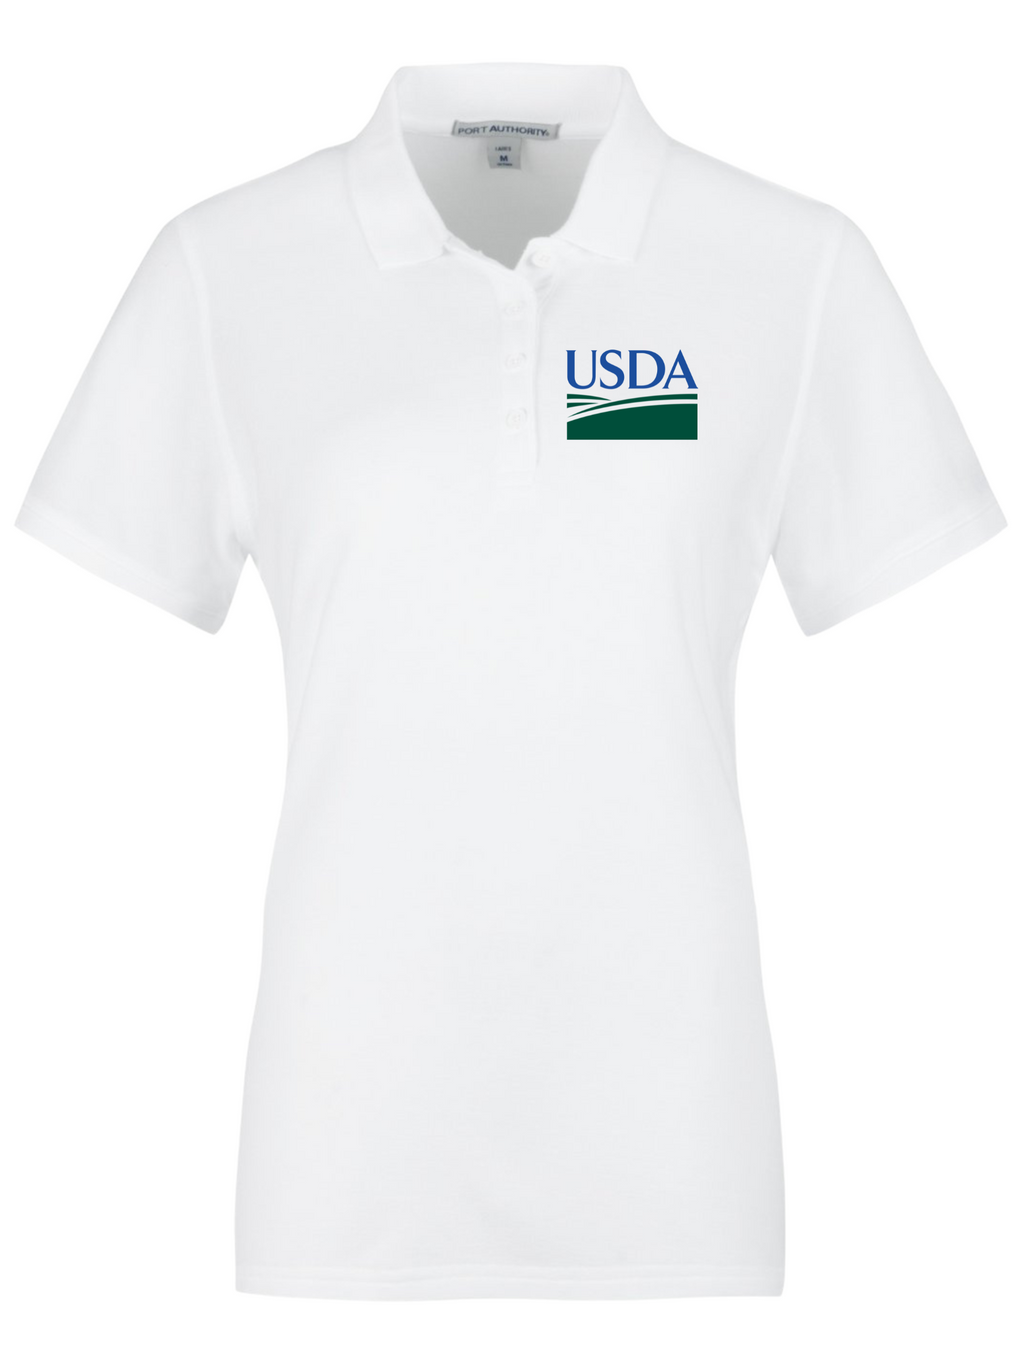 USDA Polo Shirt - Women's Short Sleeve | FEDS Apparel